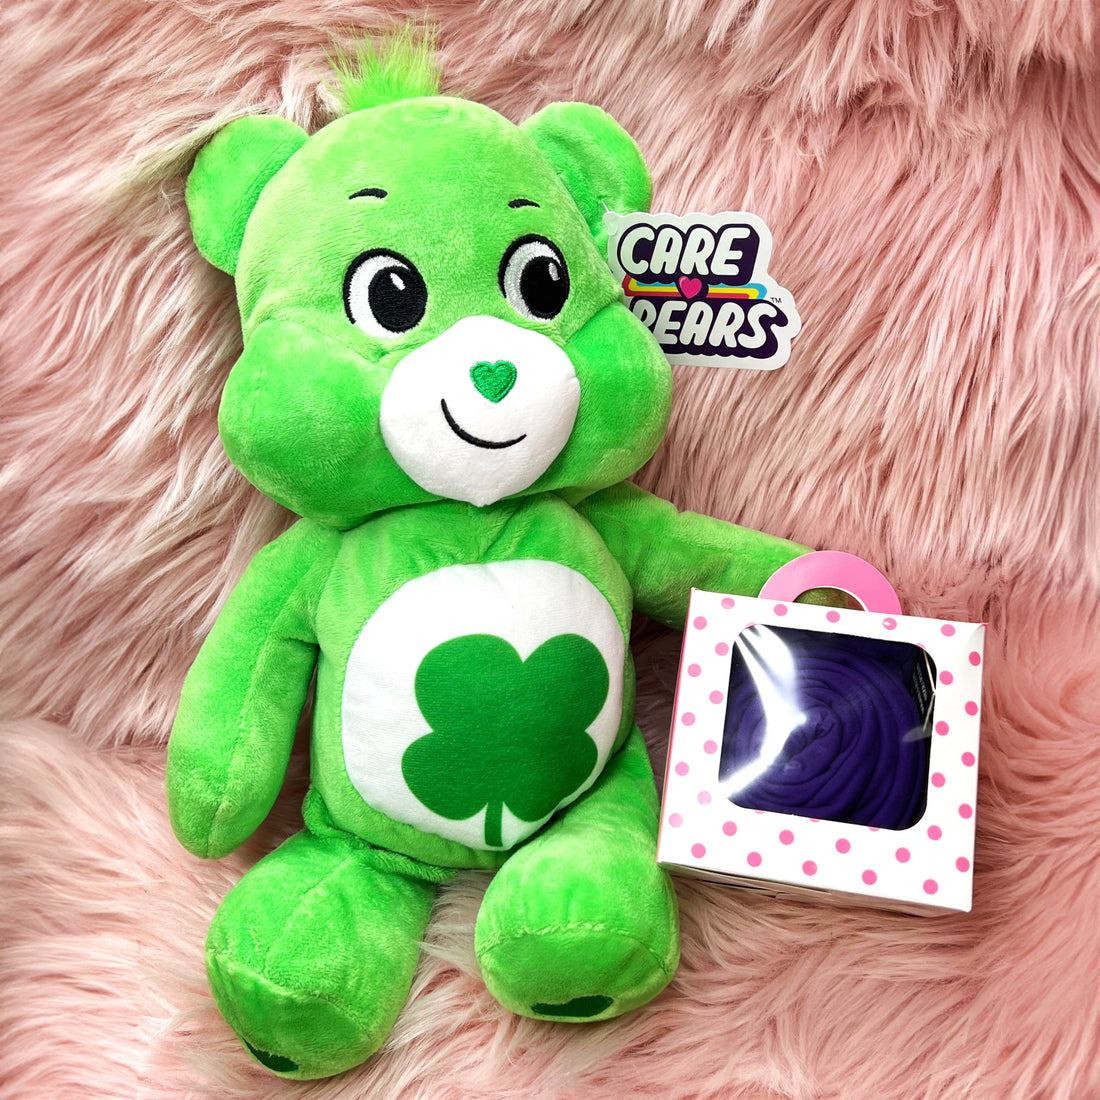 Care Bears Cupcake Leggings Gift Pack - Adorable Plush & Stylish Comfort!